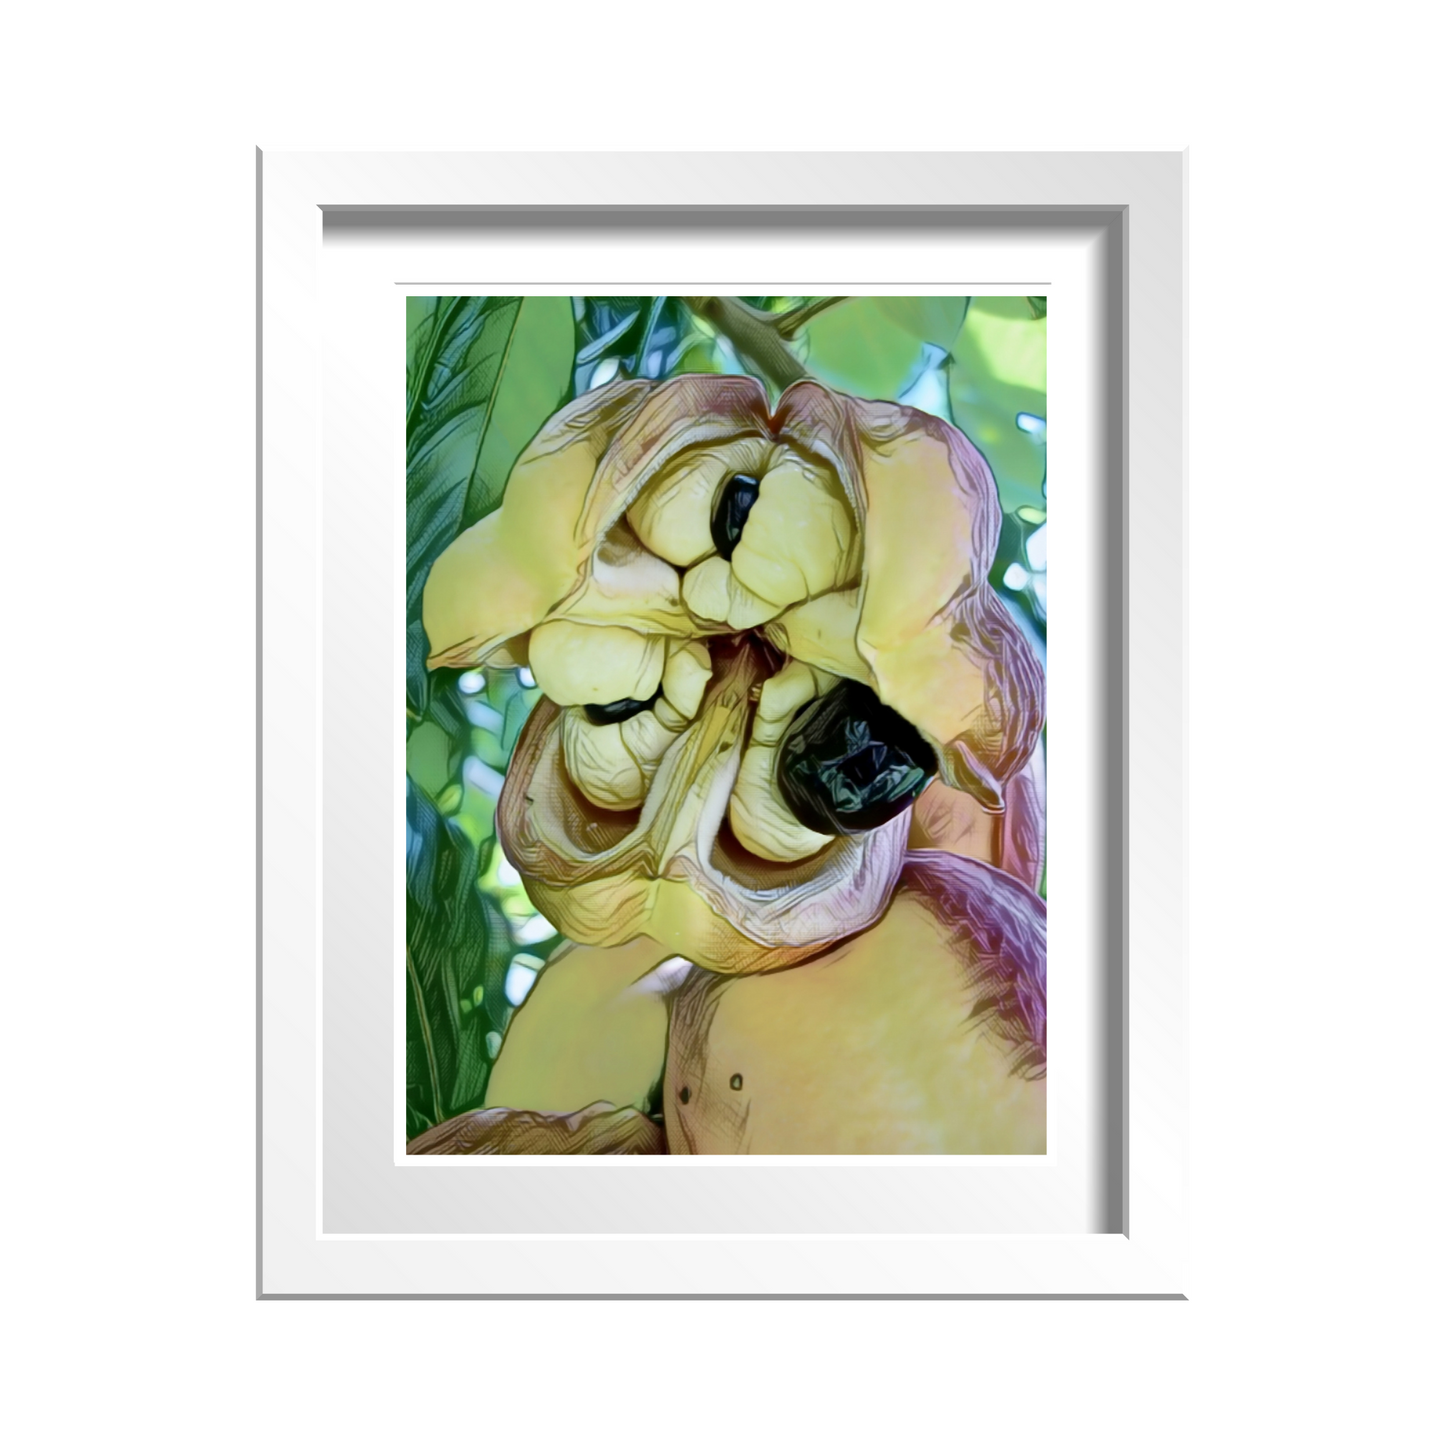 Ackee - Jamaica's National Fruit